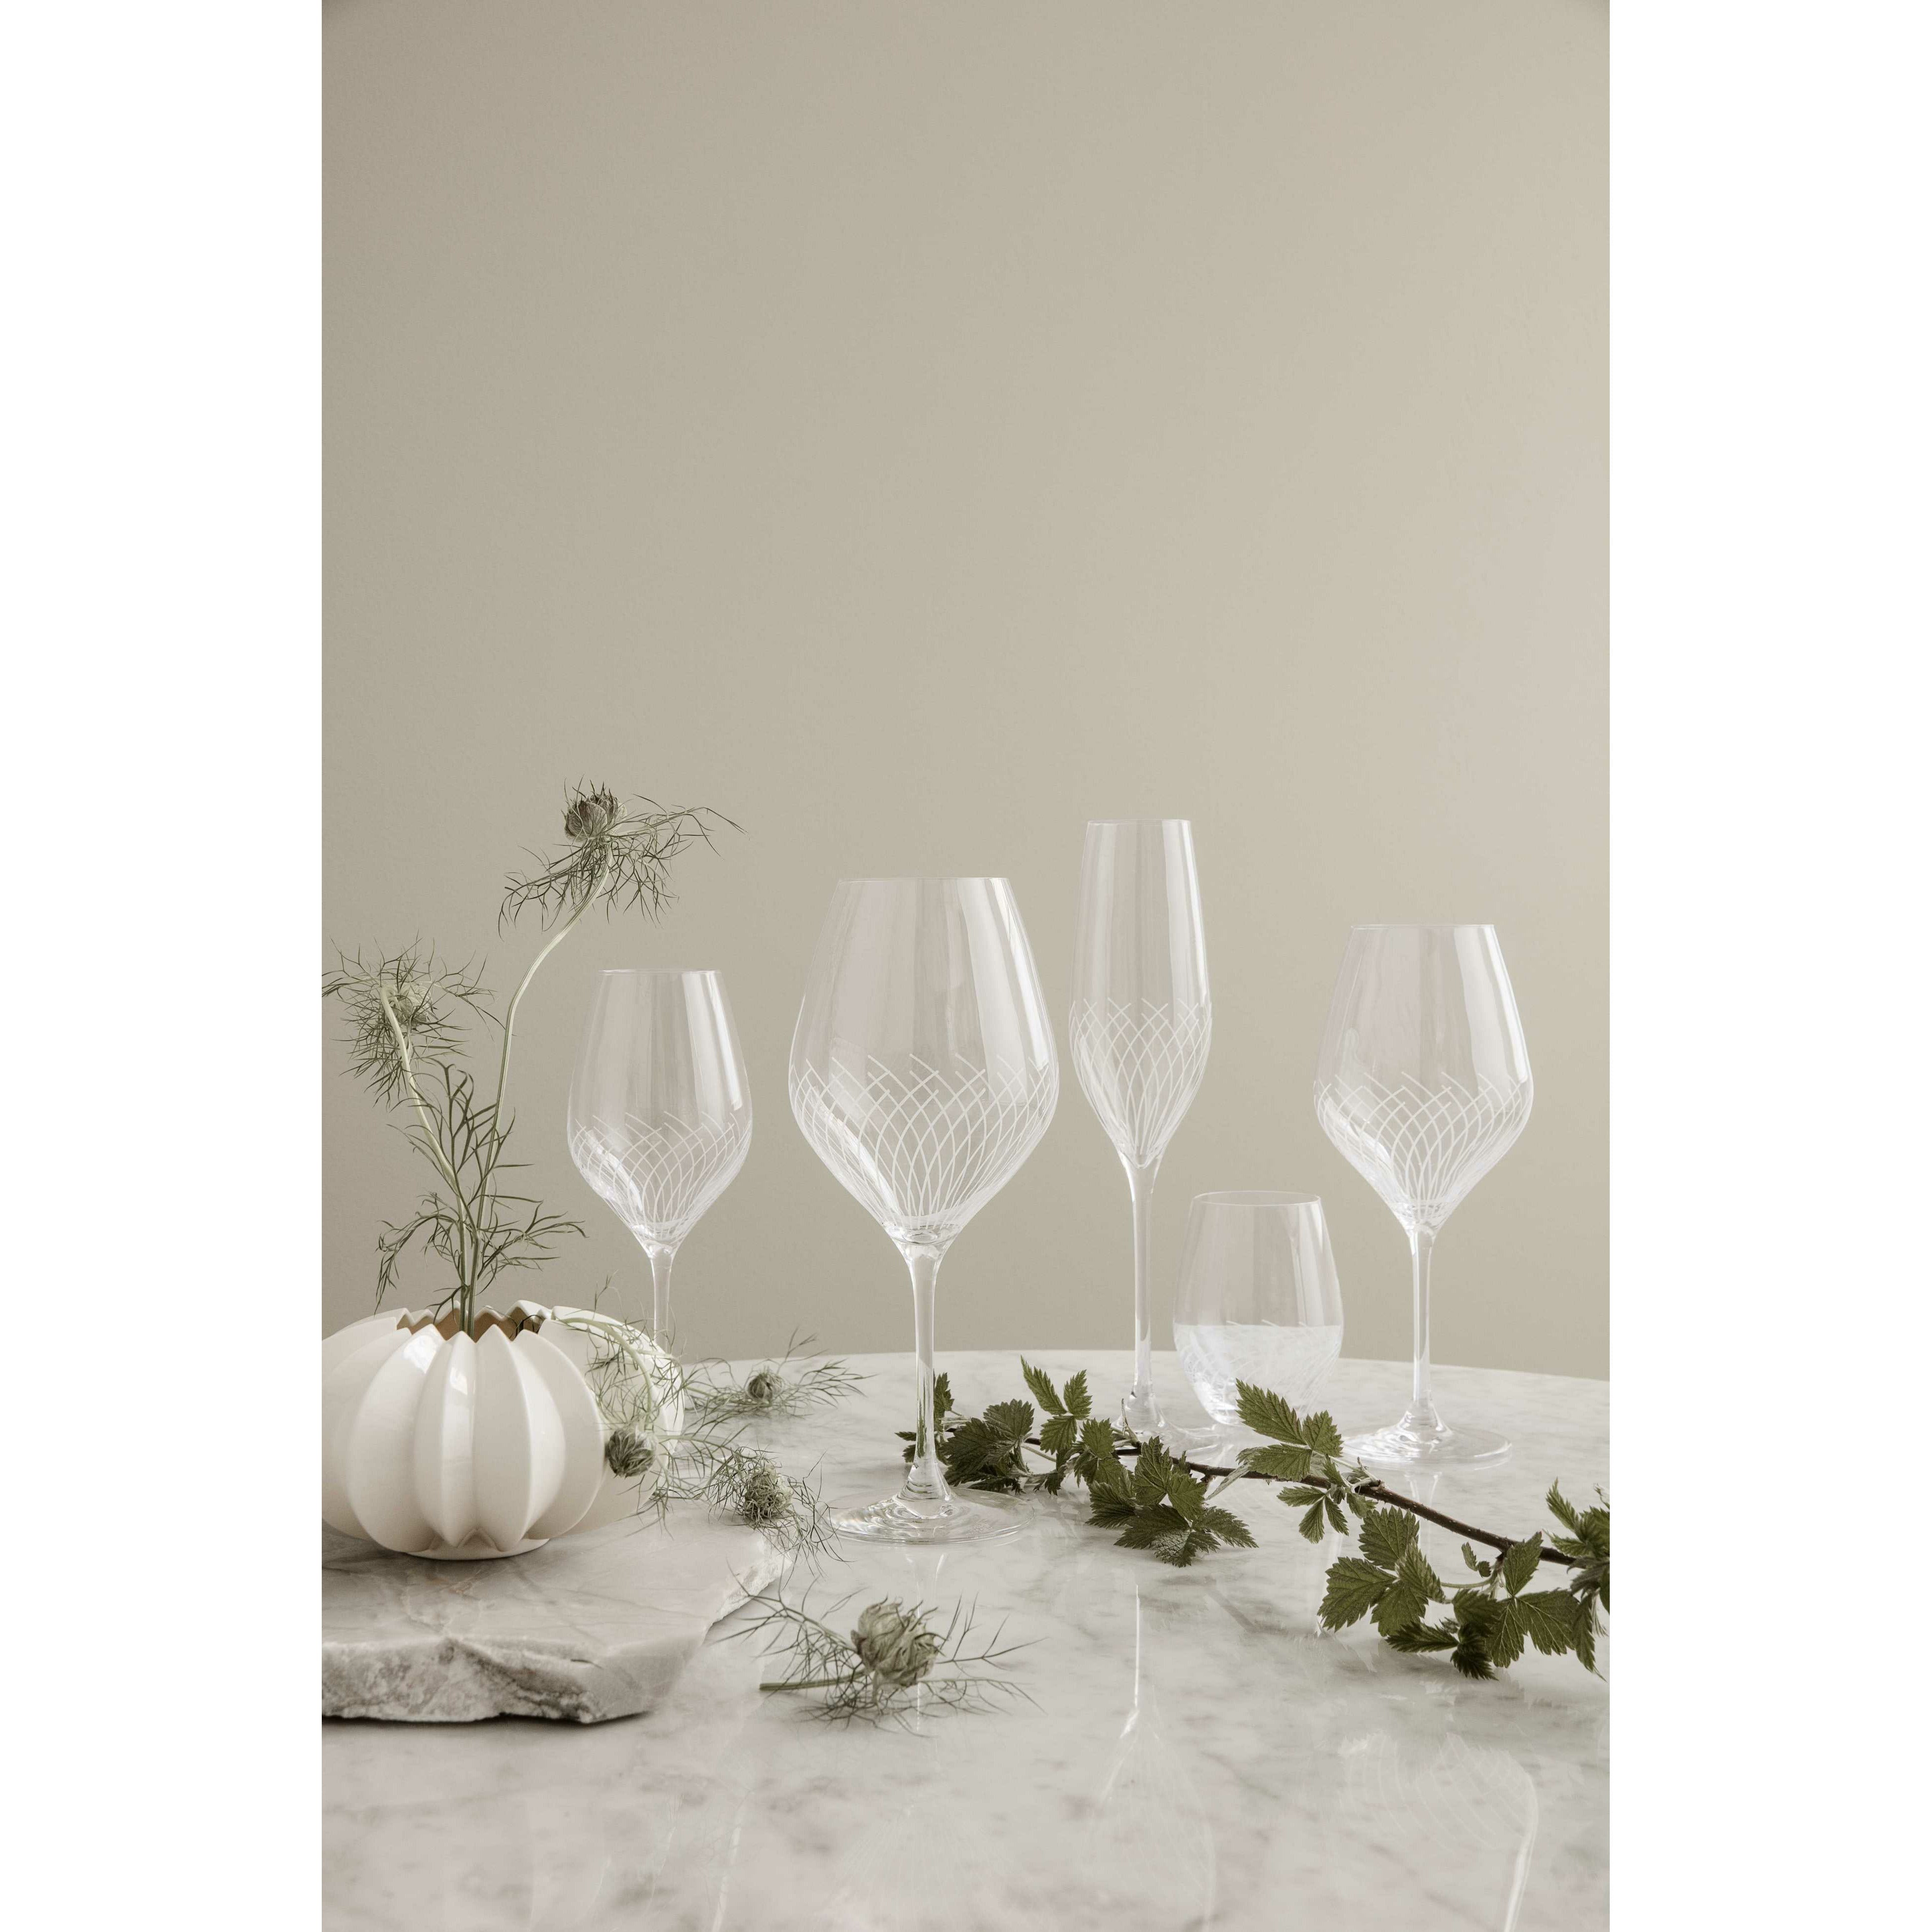 Holmegaard Cabernet Lines White Wine Glass, 2 Pcs.